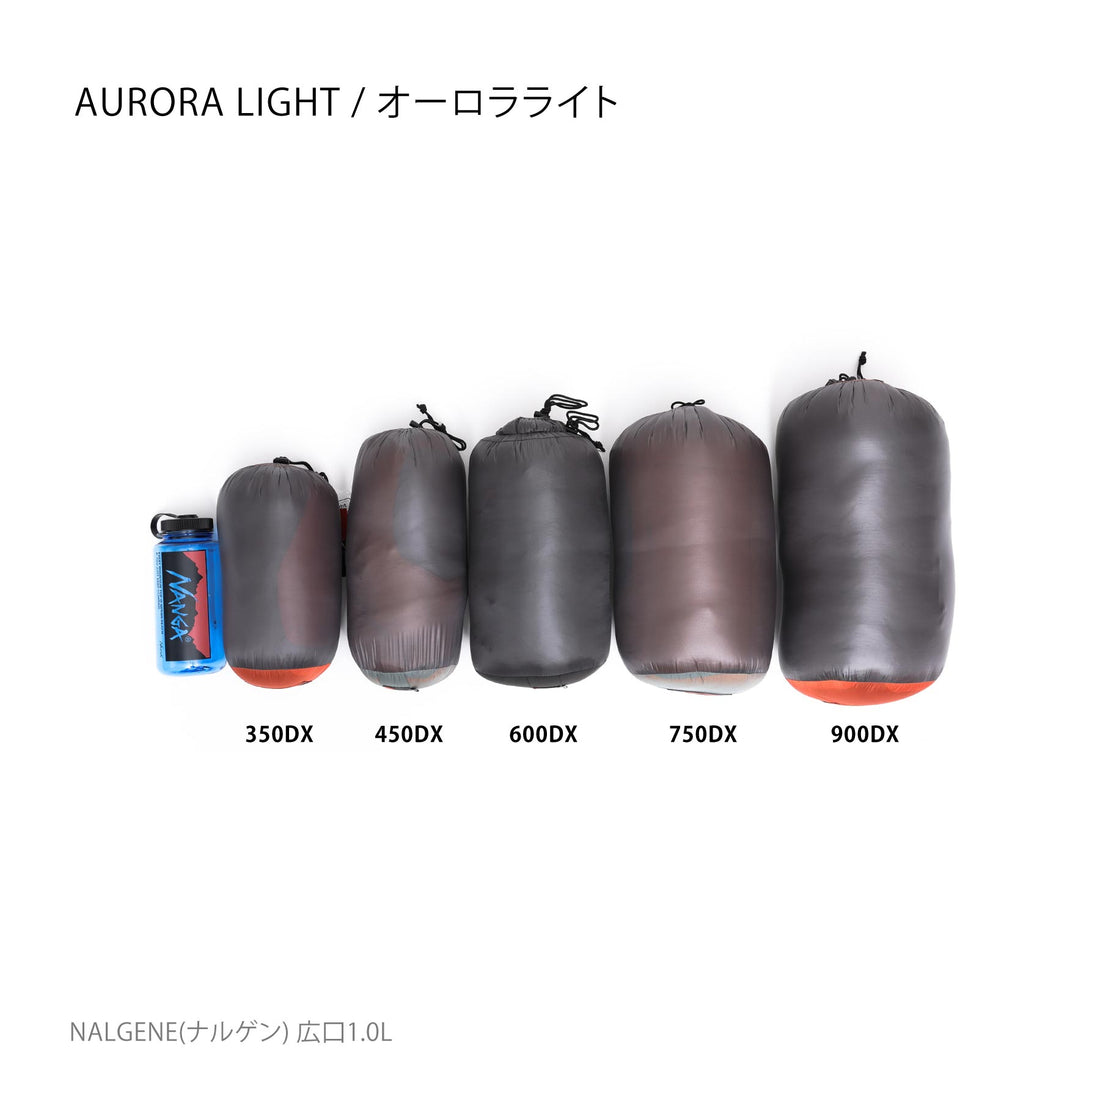 AURORA light 450 DX / オーロラライト450DX